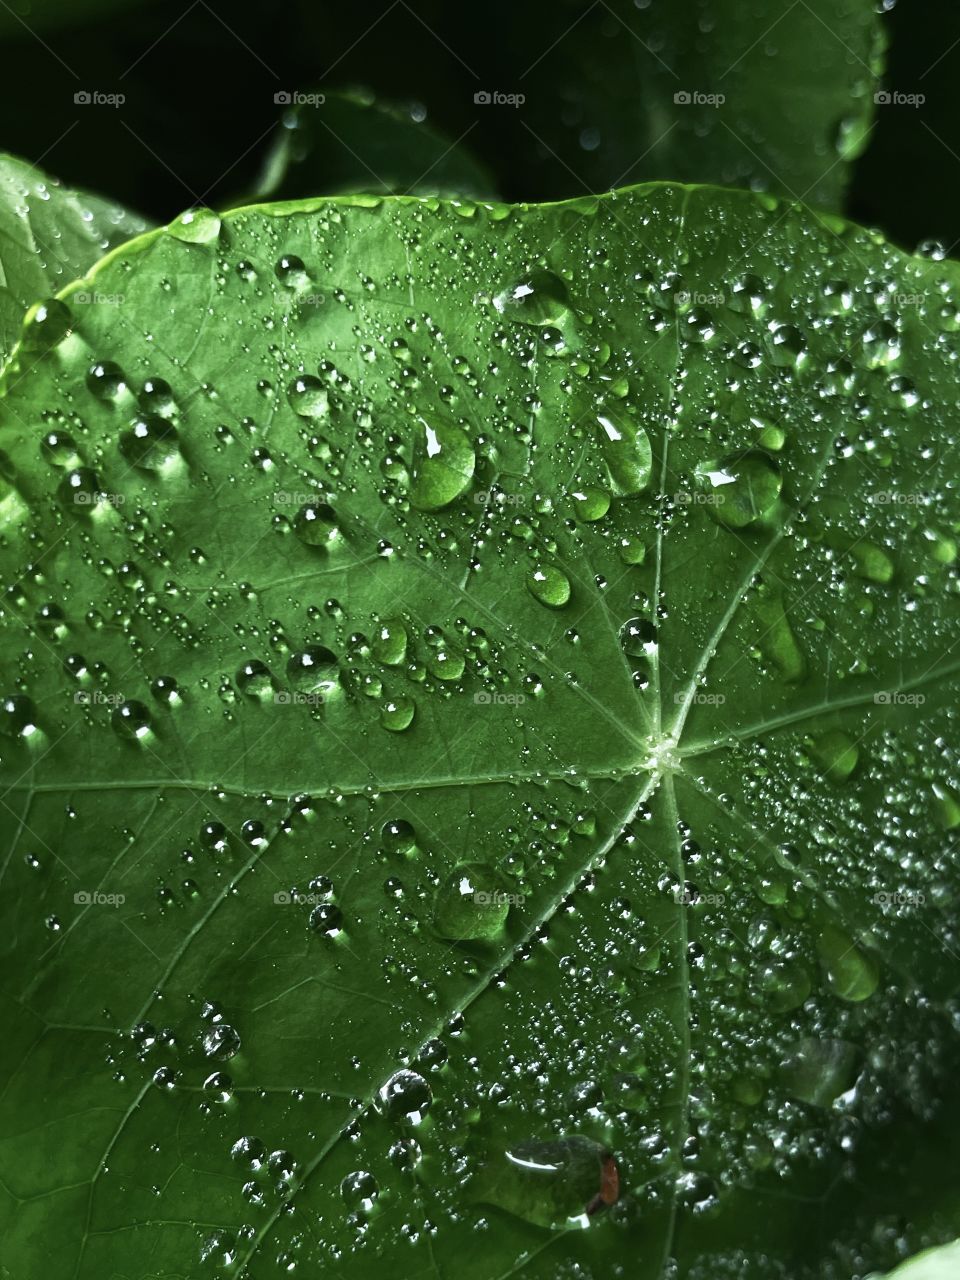 Droplets water drops rainfall leaf plant nature raindrops bubbles green downpour weather dewdrops